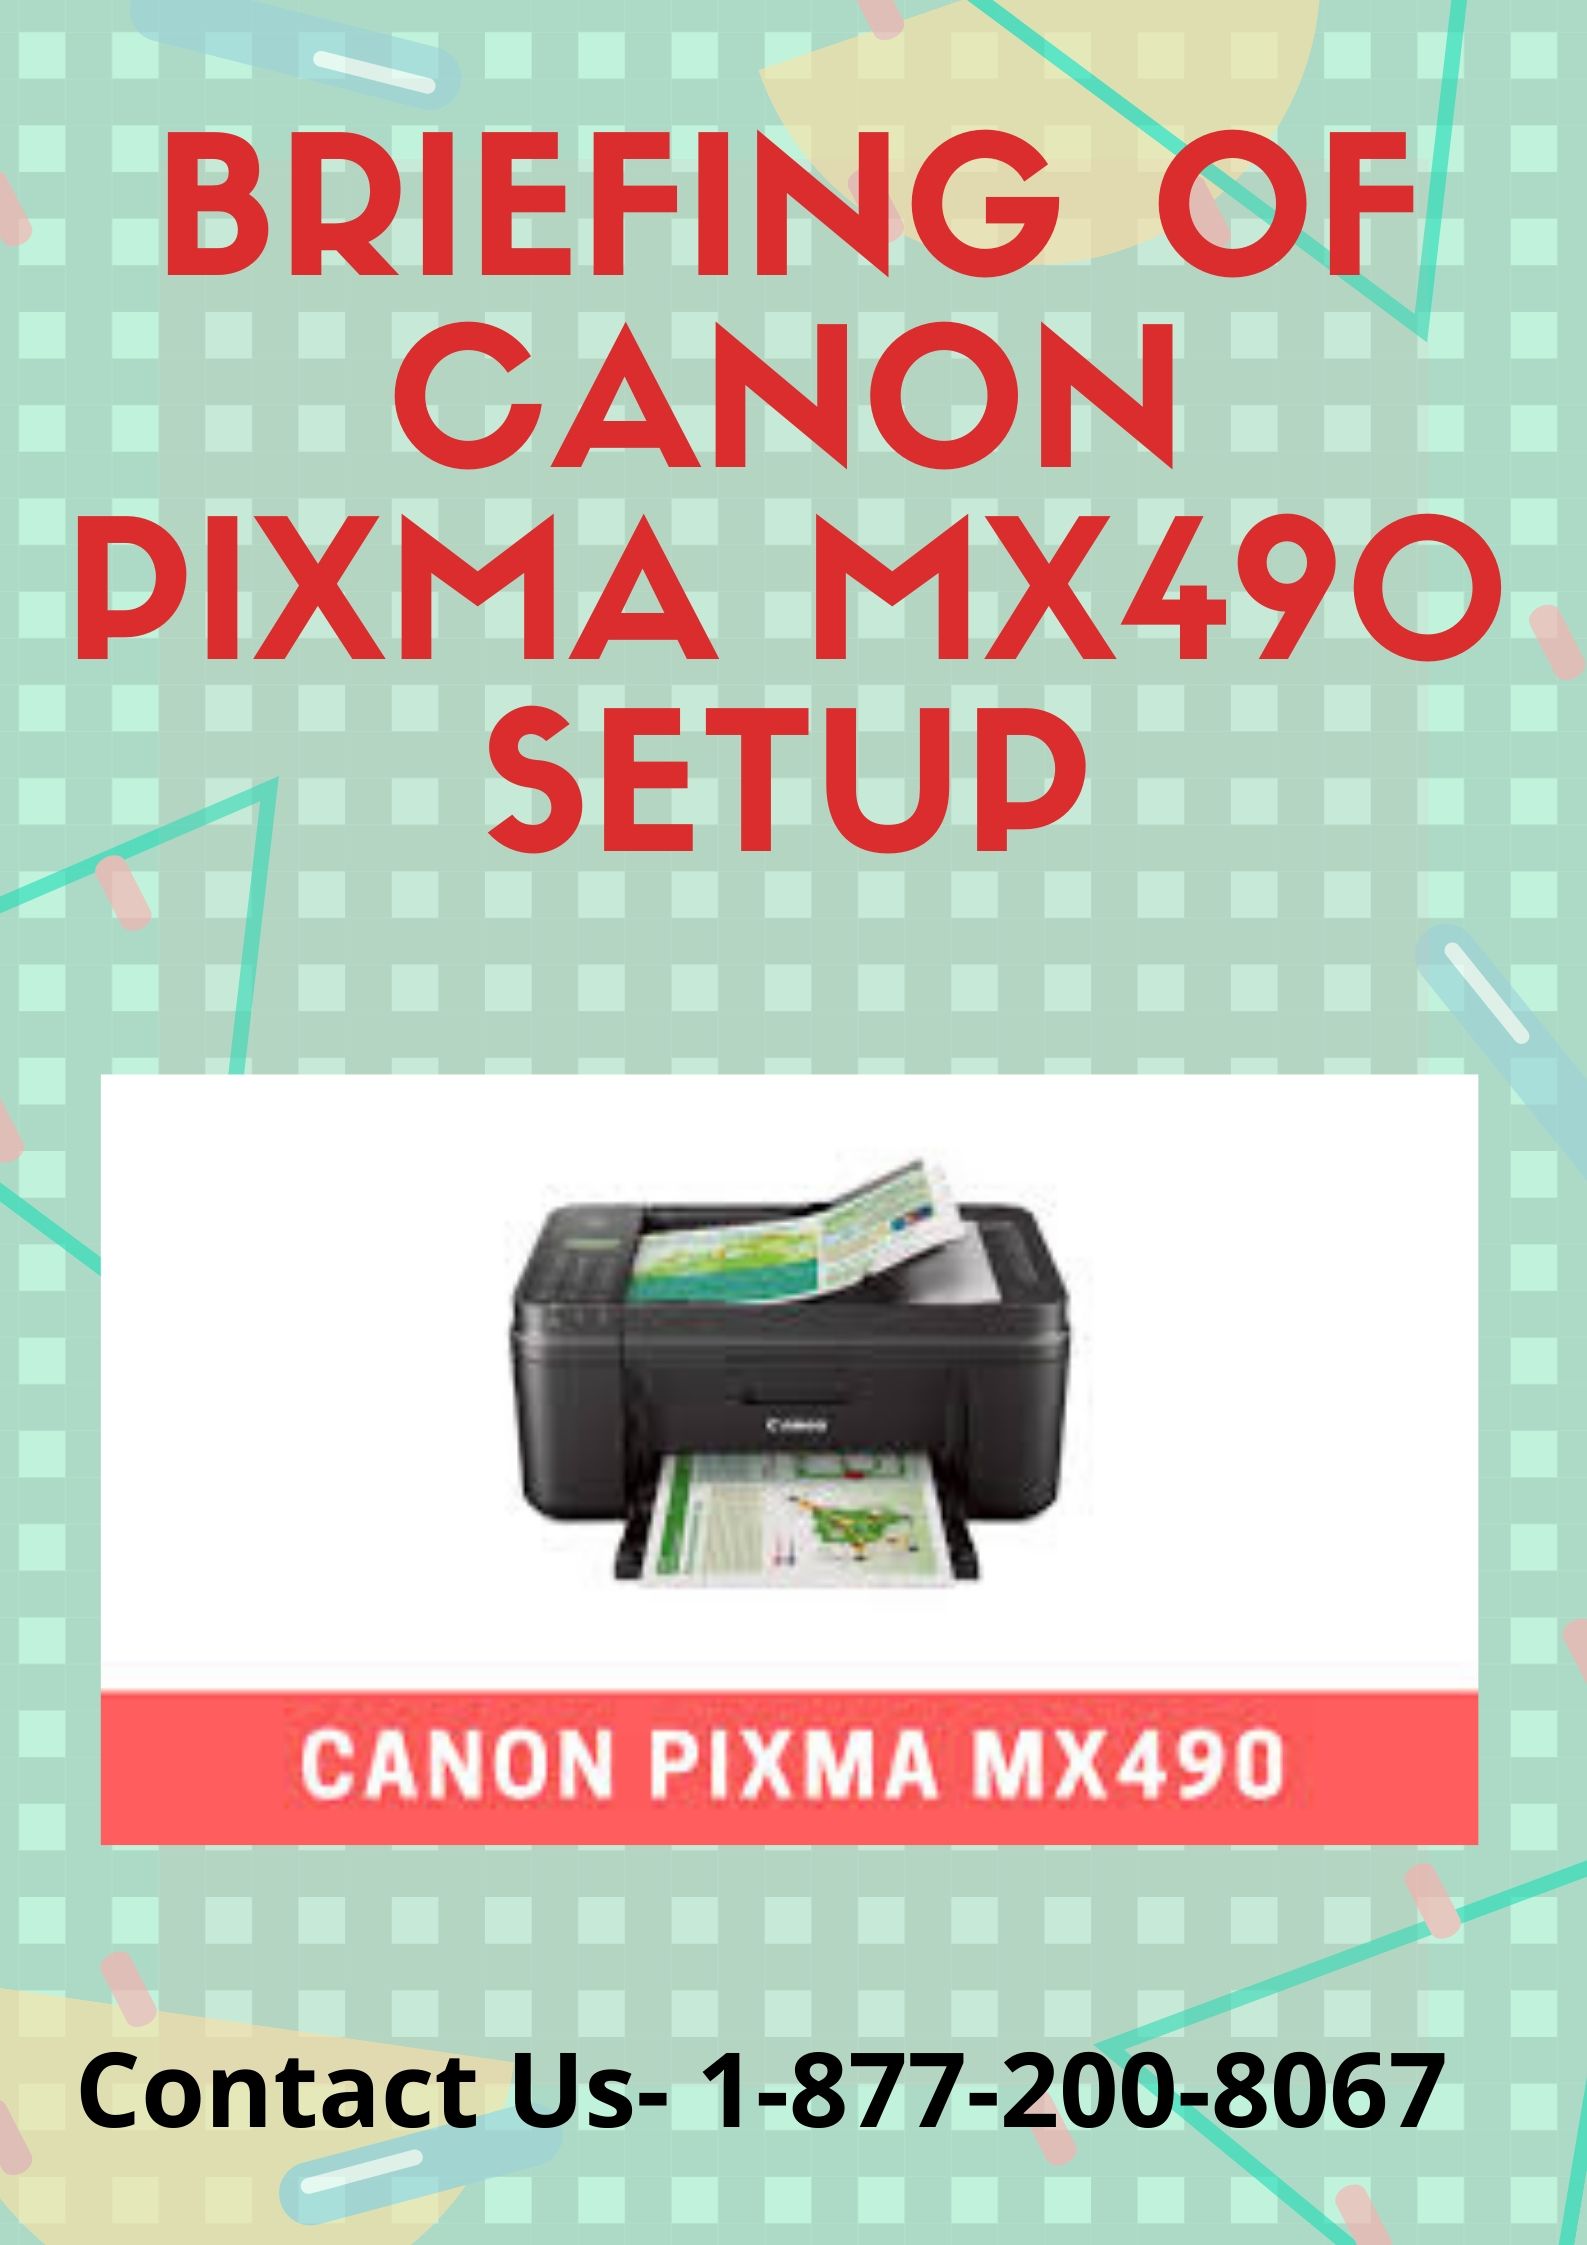 working of canon pixma mx490 setup9 (1).jpg